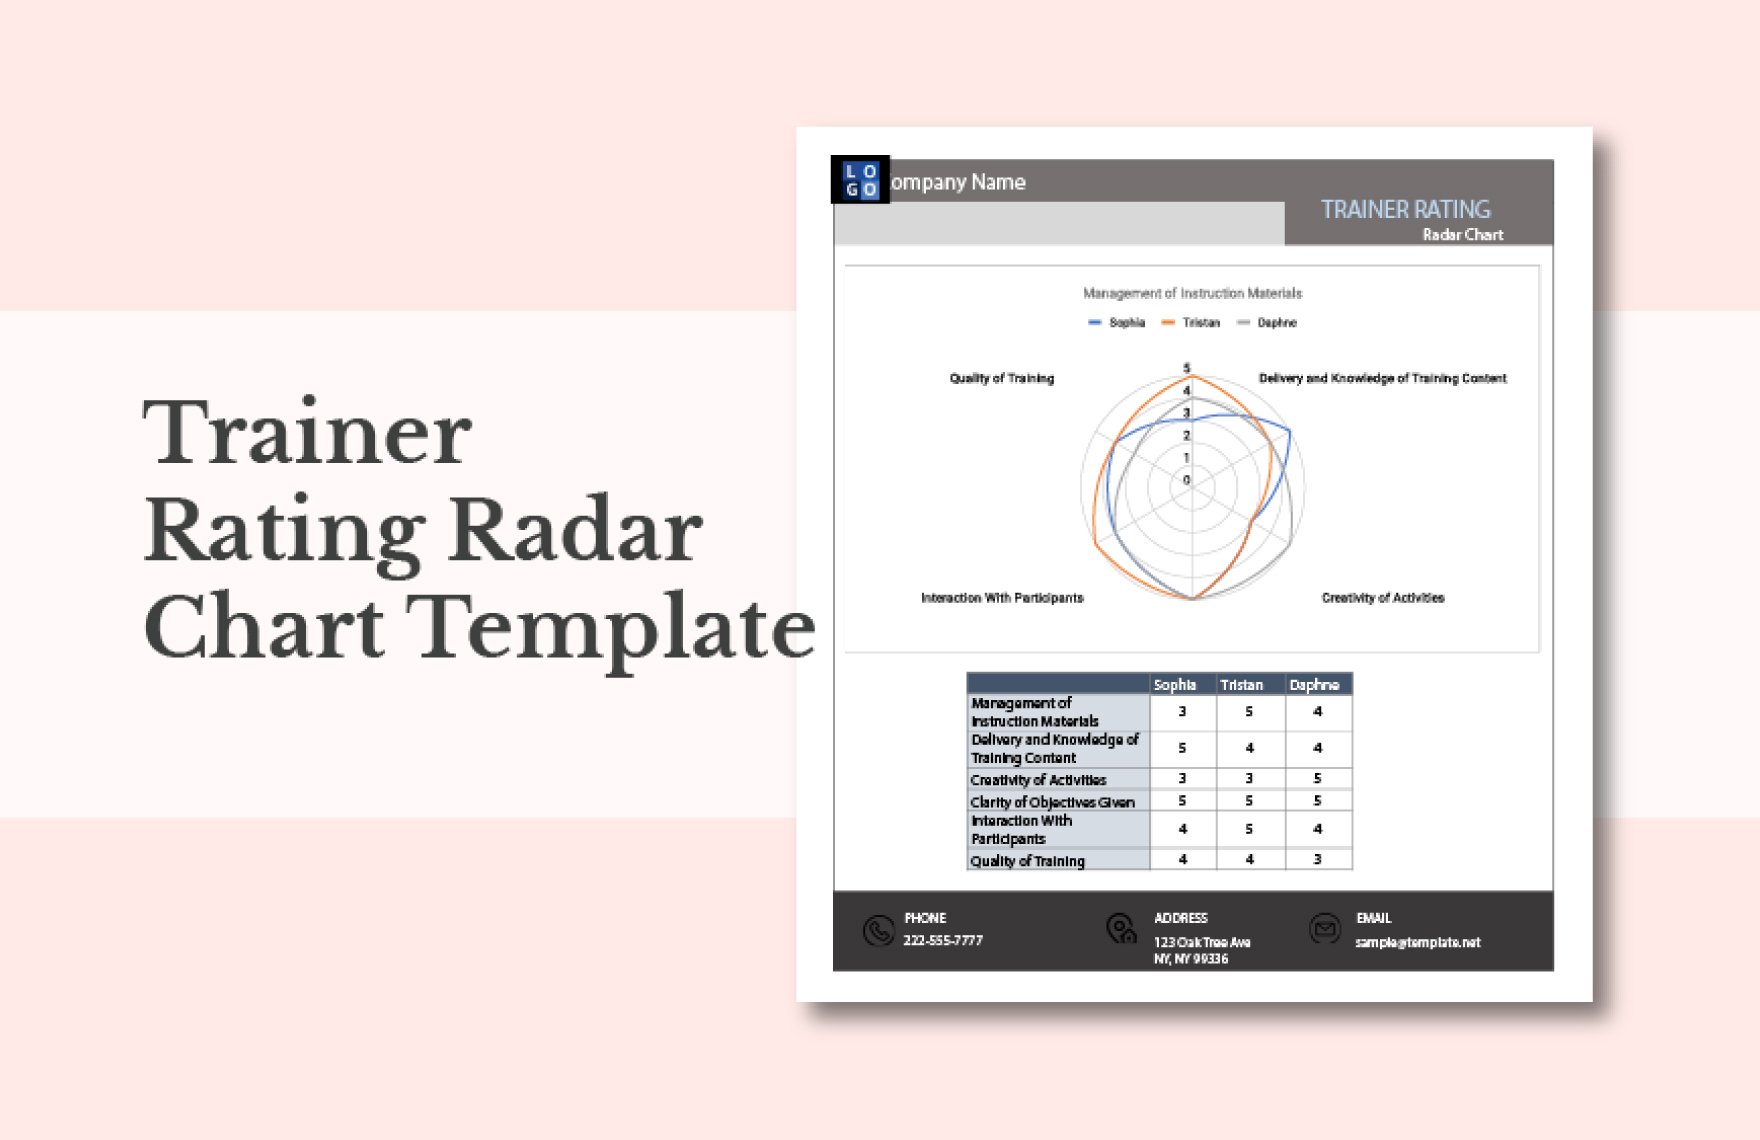 Trainer Rating Radar Chart